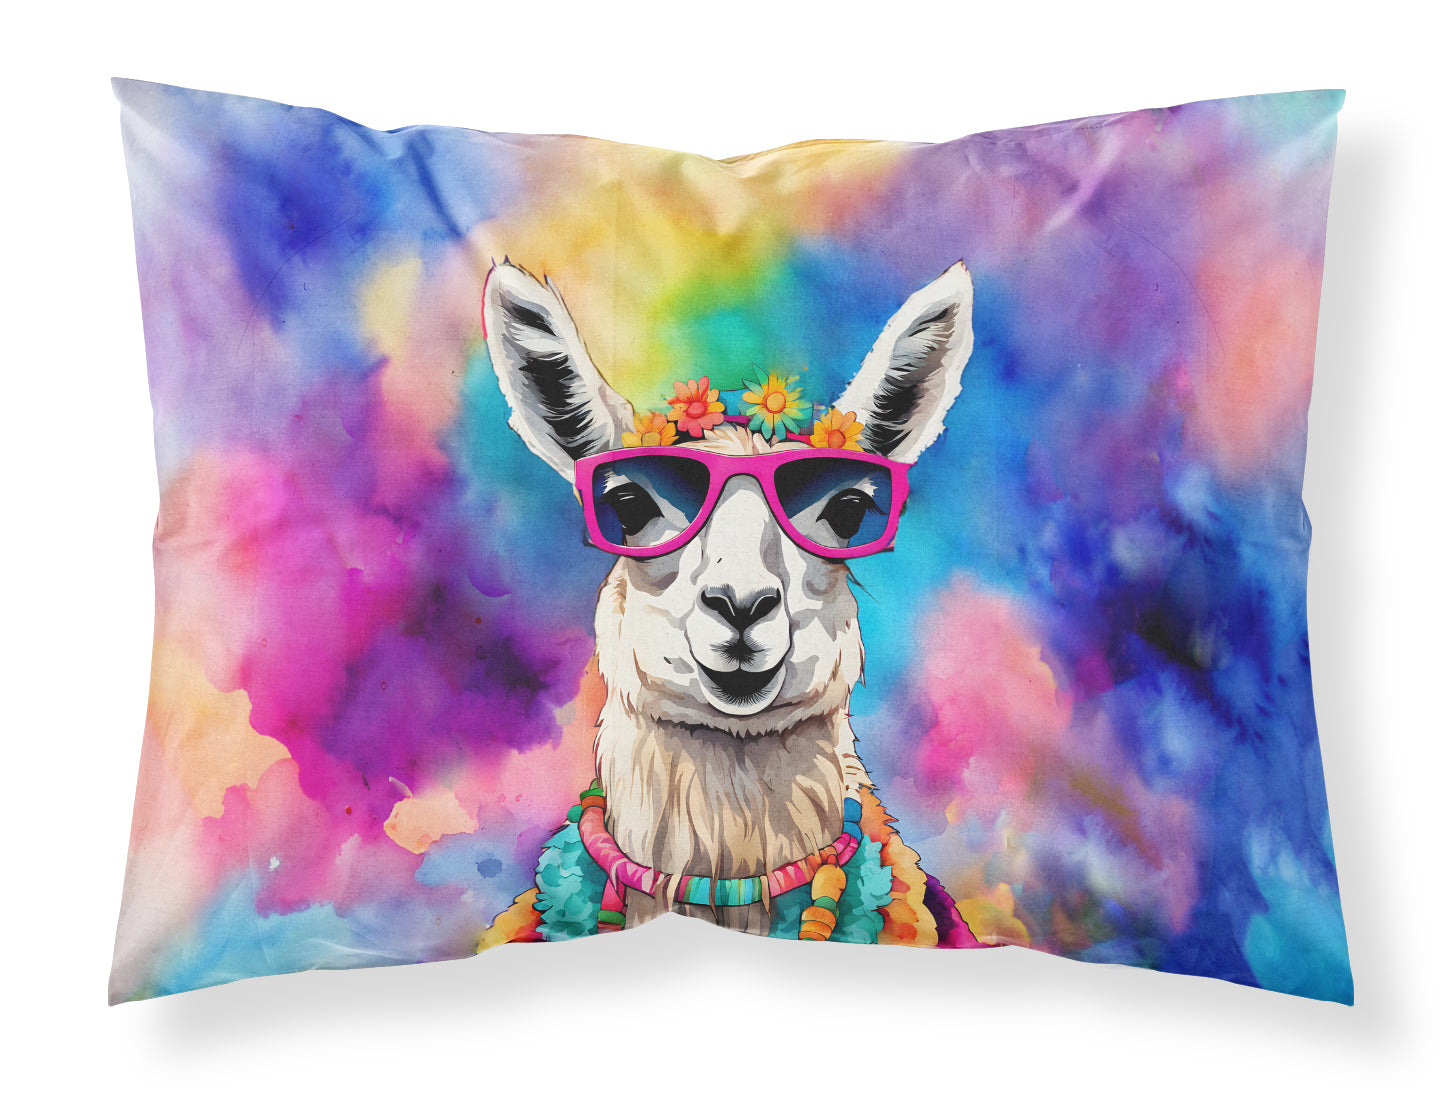 Buy this Hippie Animal Llama Standard Pillowcase